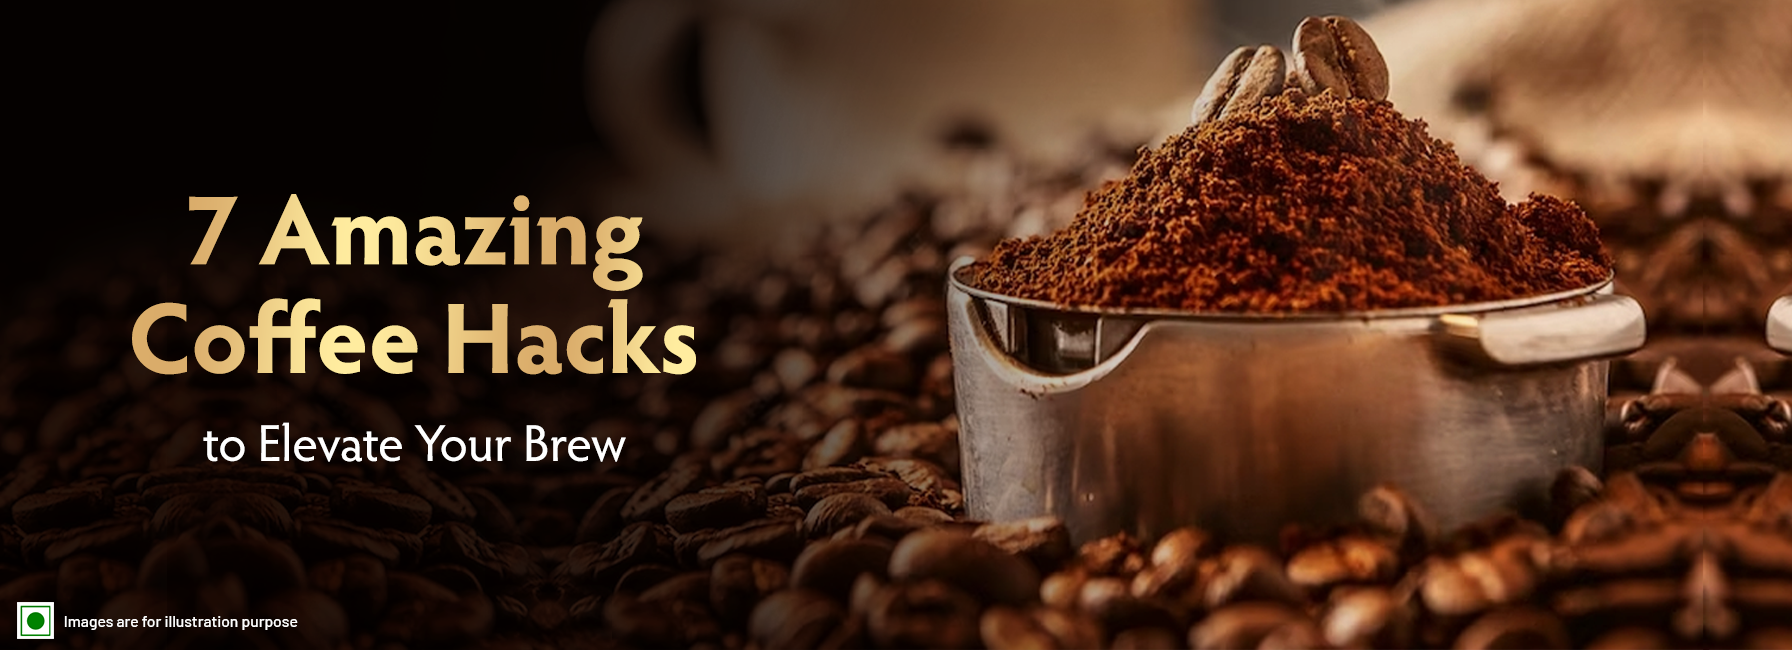 7 Amazing Coffee Hacks to Elevate Your Brew